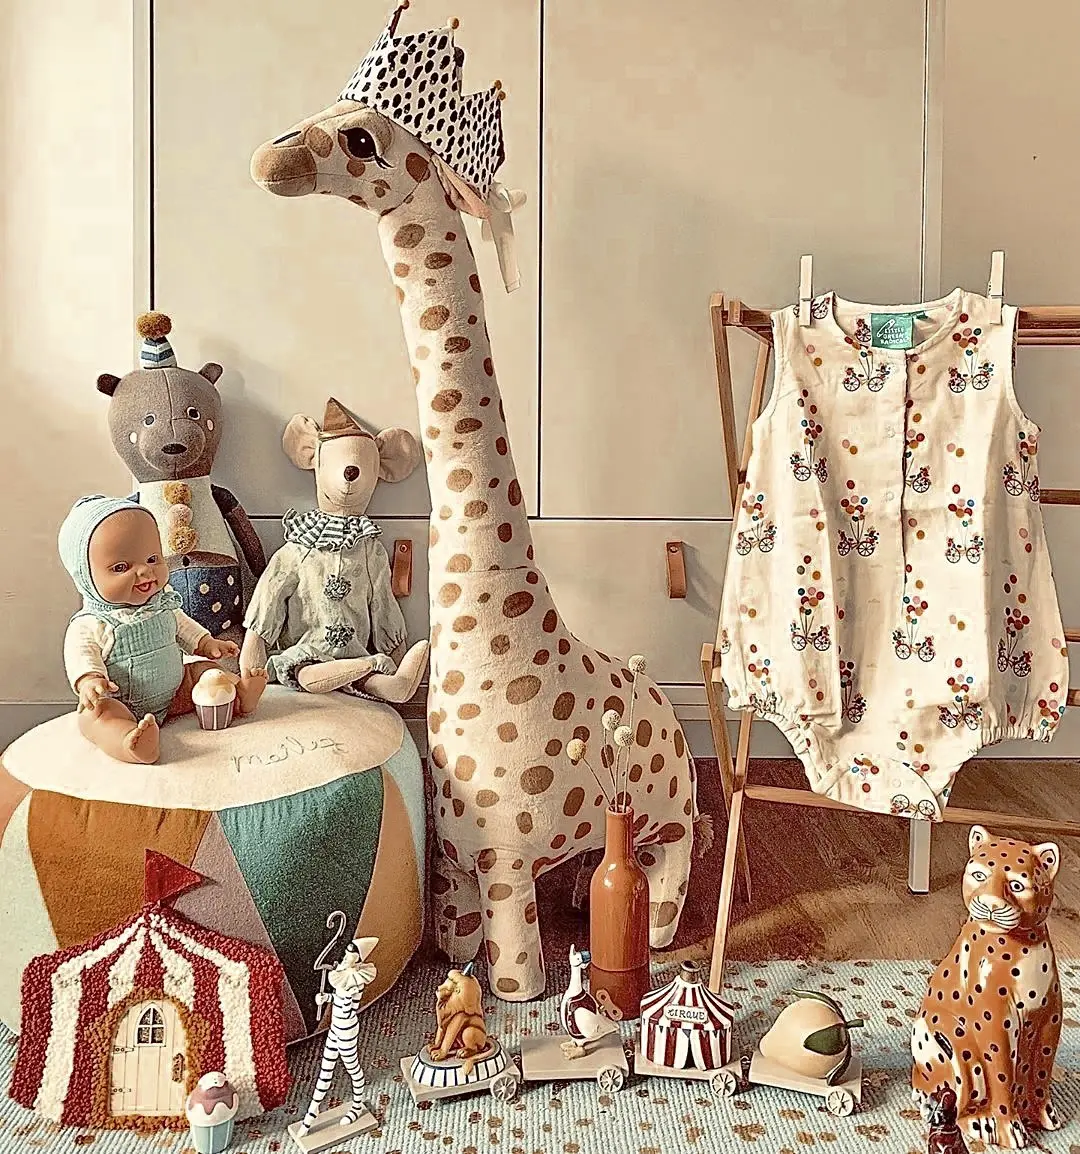 Hot Sale Cartoon Giraffe Baby Soothing Doll Big giraffe for Kids Children Doll Stuffed Animals Toys